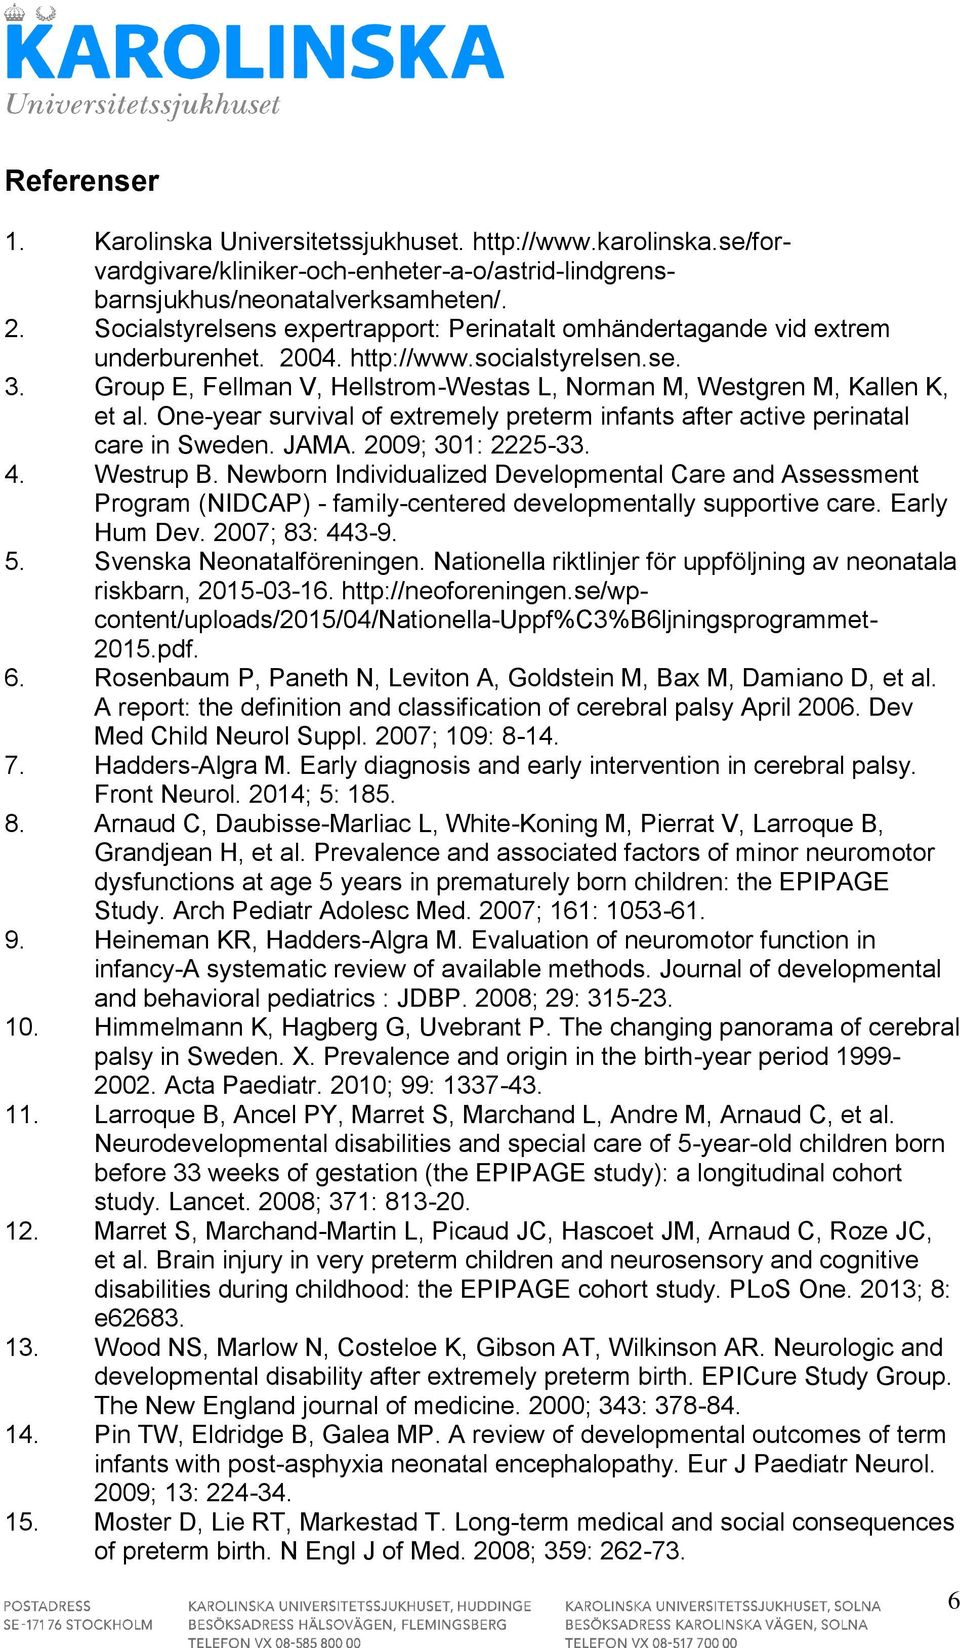 Group E, Fellman V, Hellstrom-Westas L, Norman M, Westgren M, Kallen K, et al. One-year survival of extremely preterm infants after active perinatal care in Sweden. JAMA. 2009; 301: 2225-33. 4.